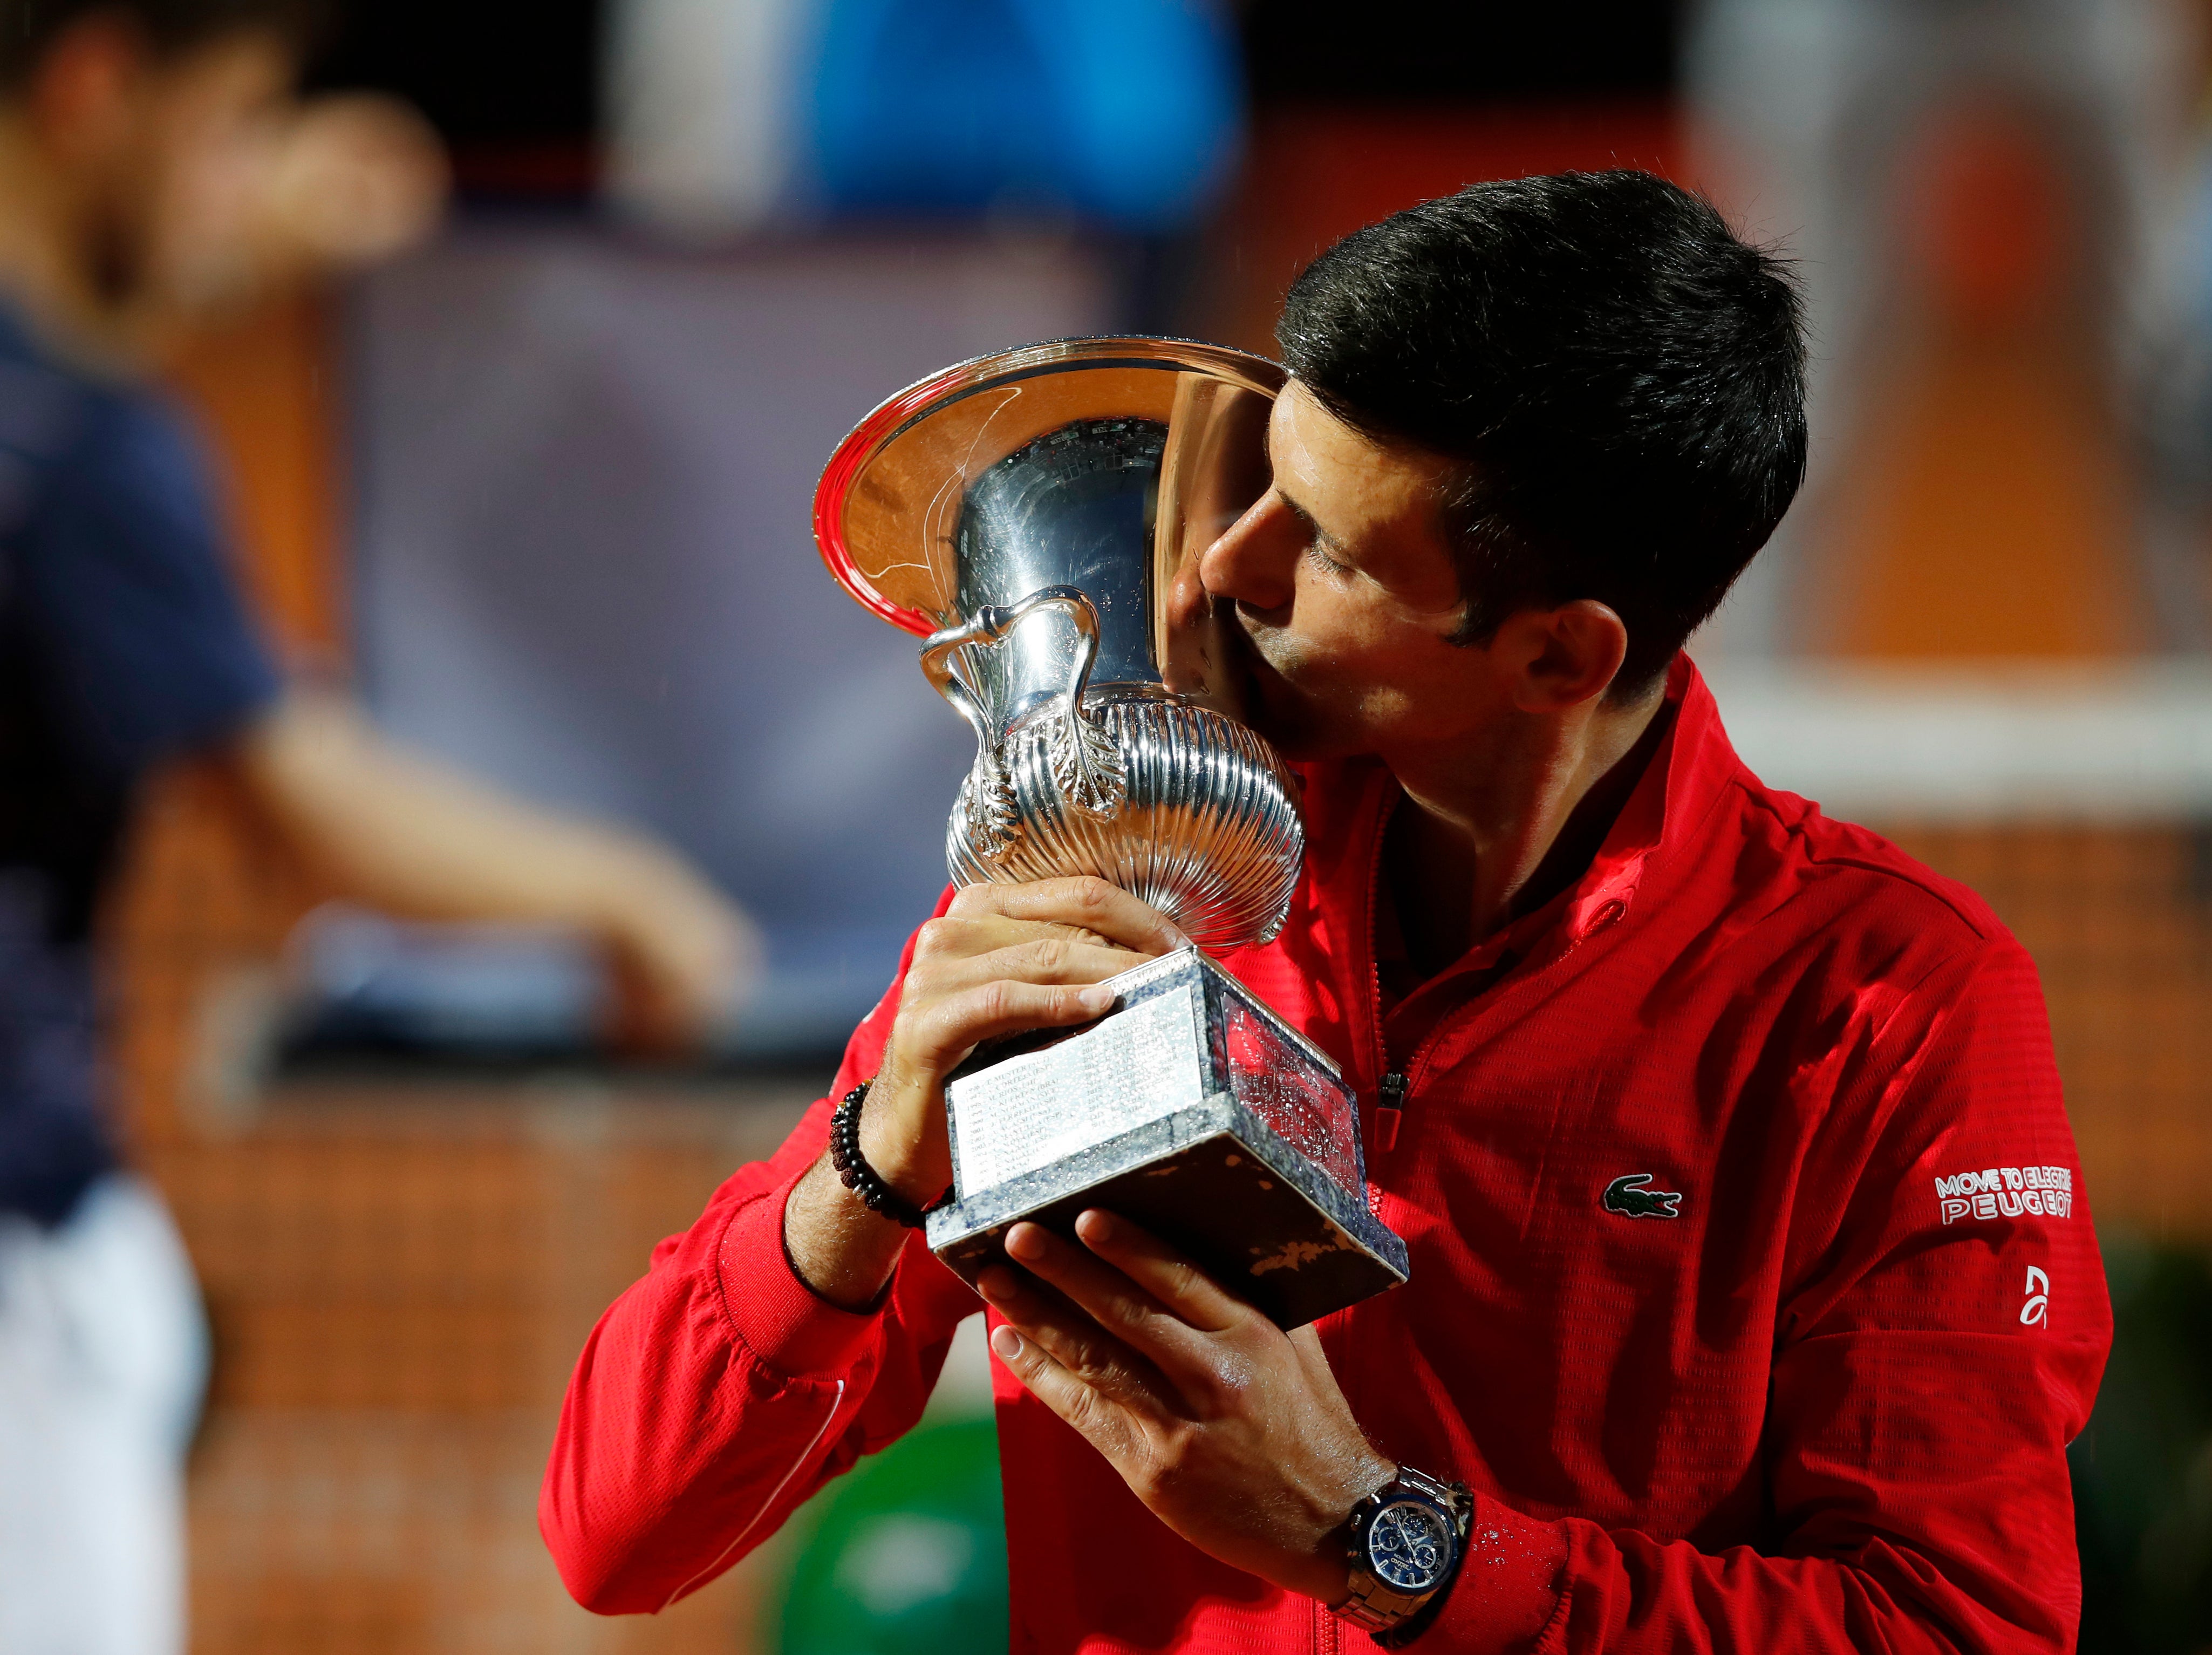 Novak Djokovic won the 2020 Italian Open title